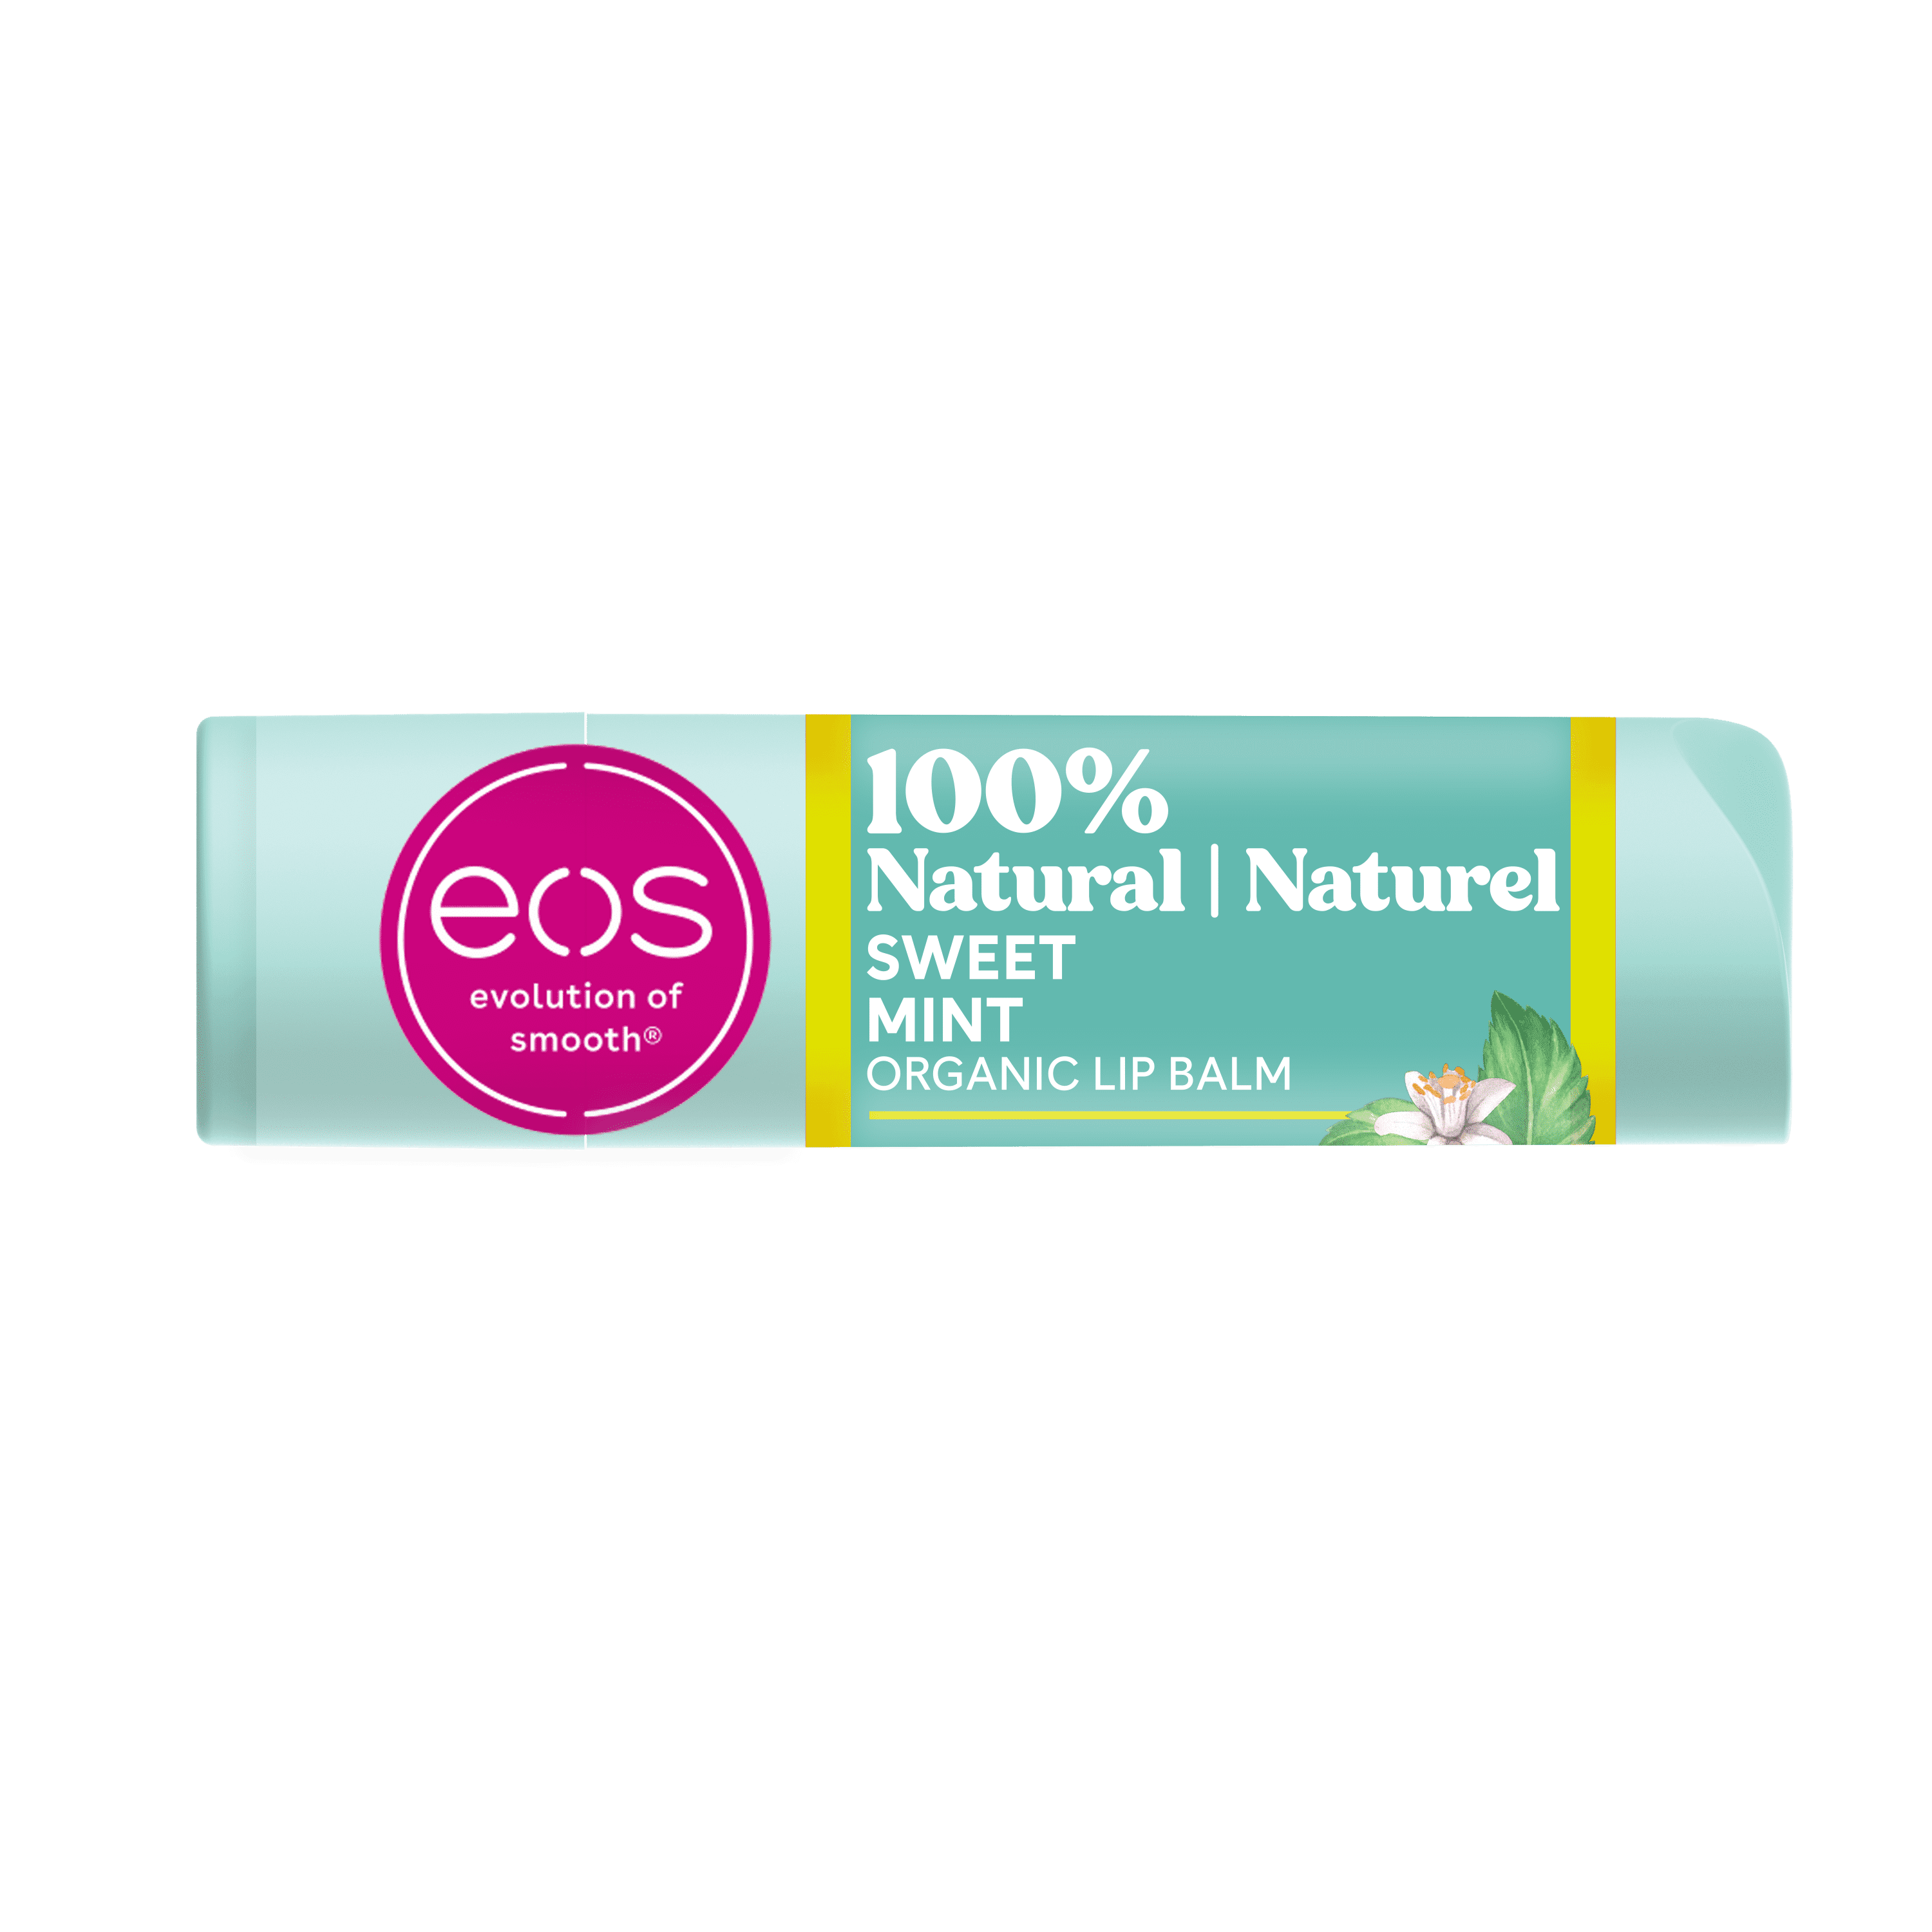 eos 100% Natural & Organic Lip Balm Sticks- Vanilla Bean, All-Day Moisture,  Dermatologist Recommended, 0.14 oz, 2-Pack